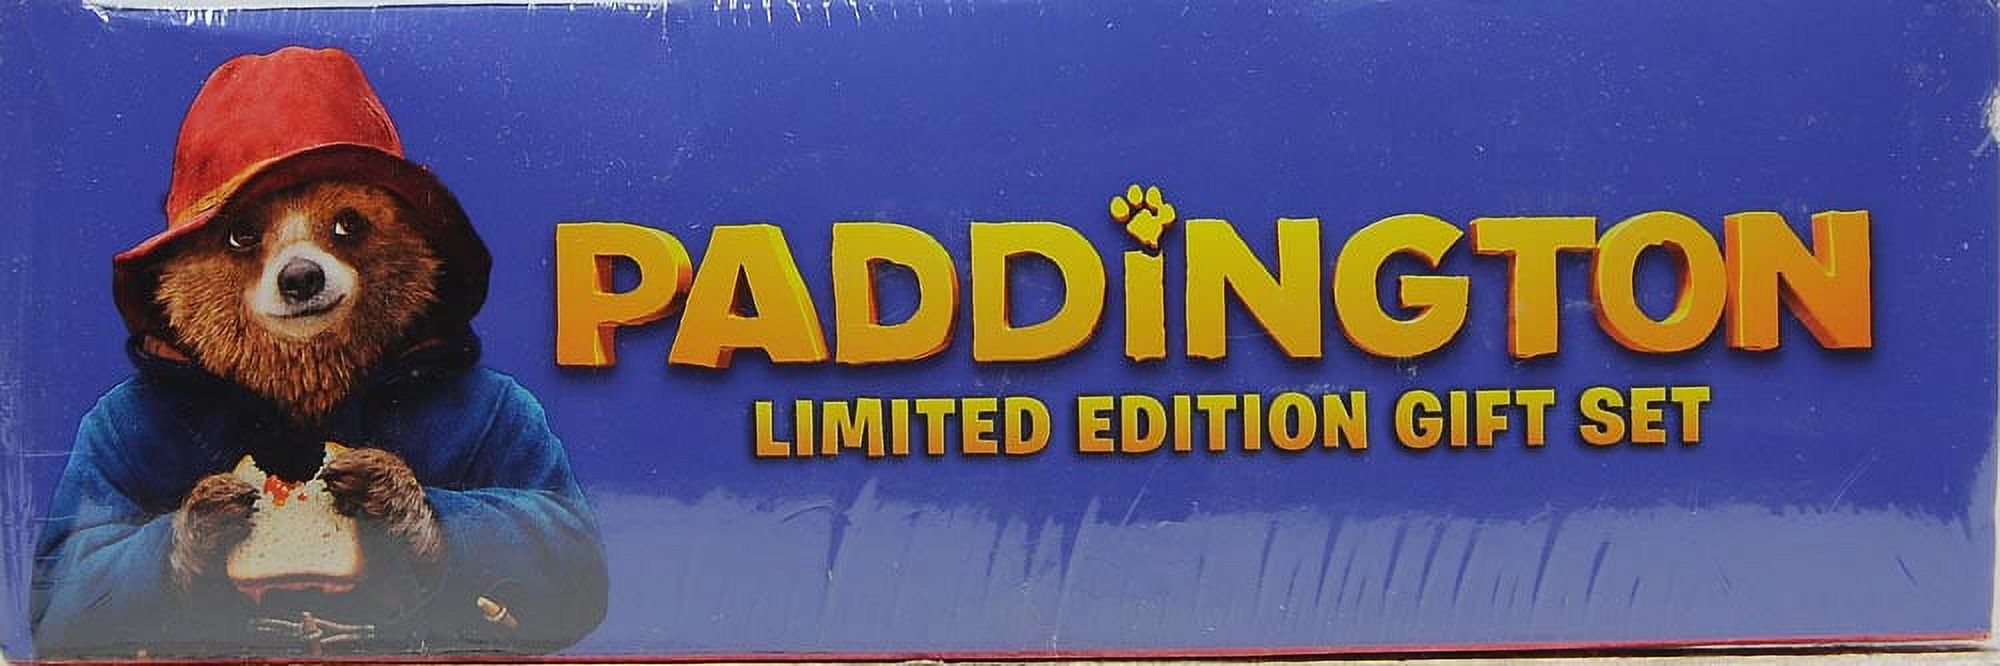 Paddington (Blu-ray + DVD + Plush Bear) (Walmart Exclusive) - image 4 of 4